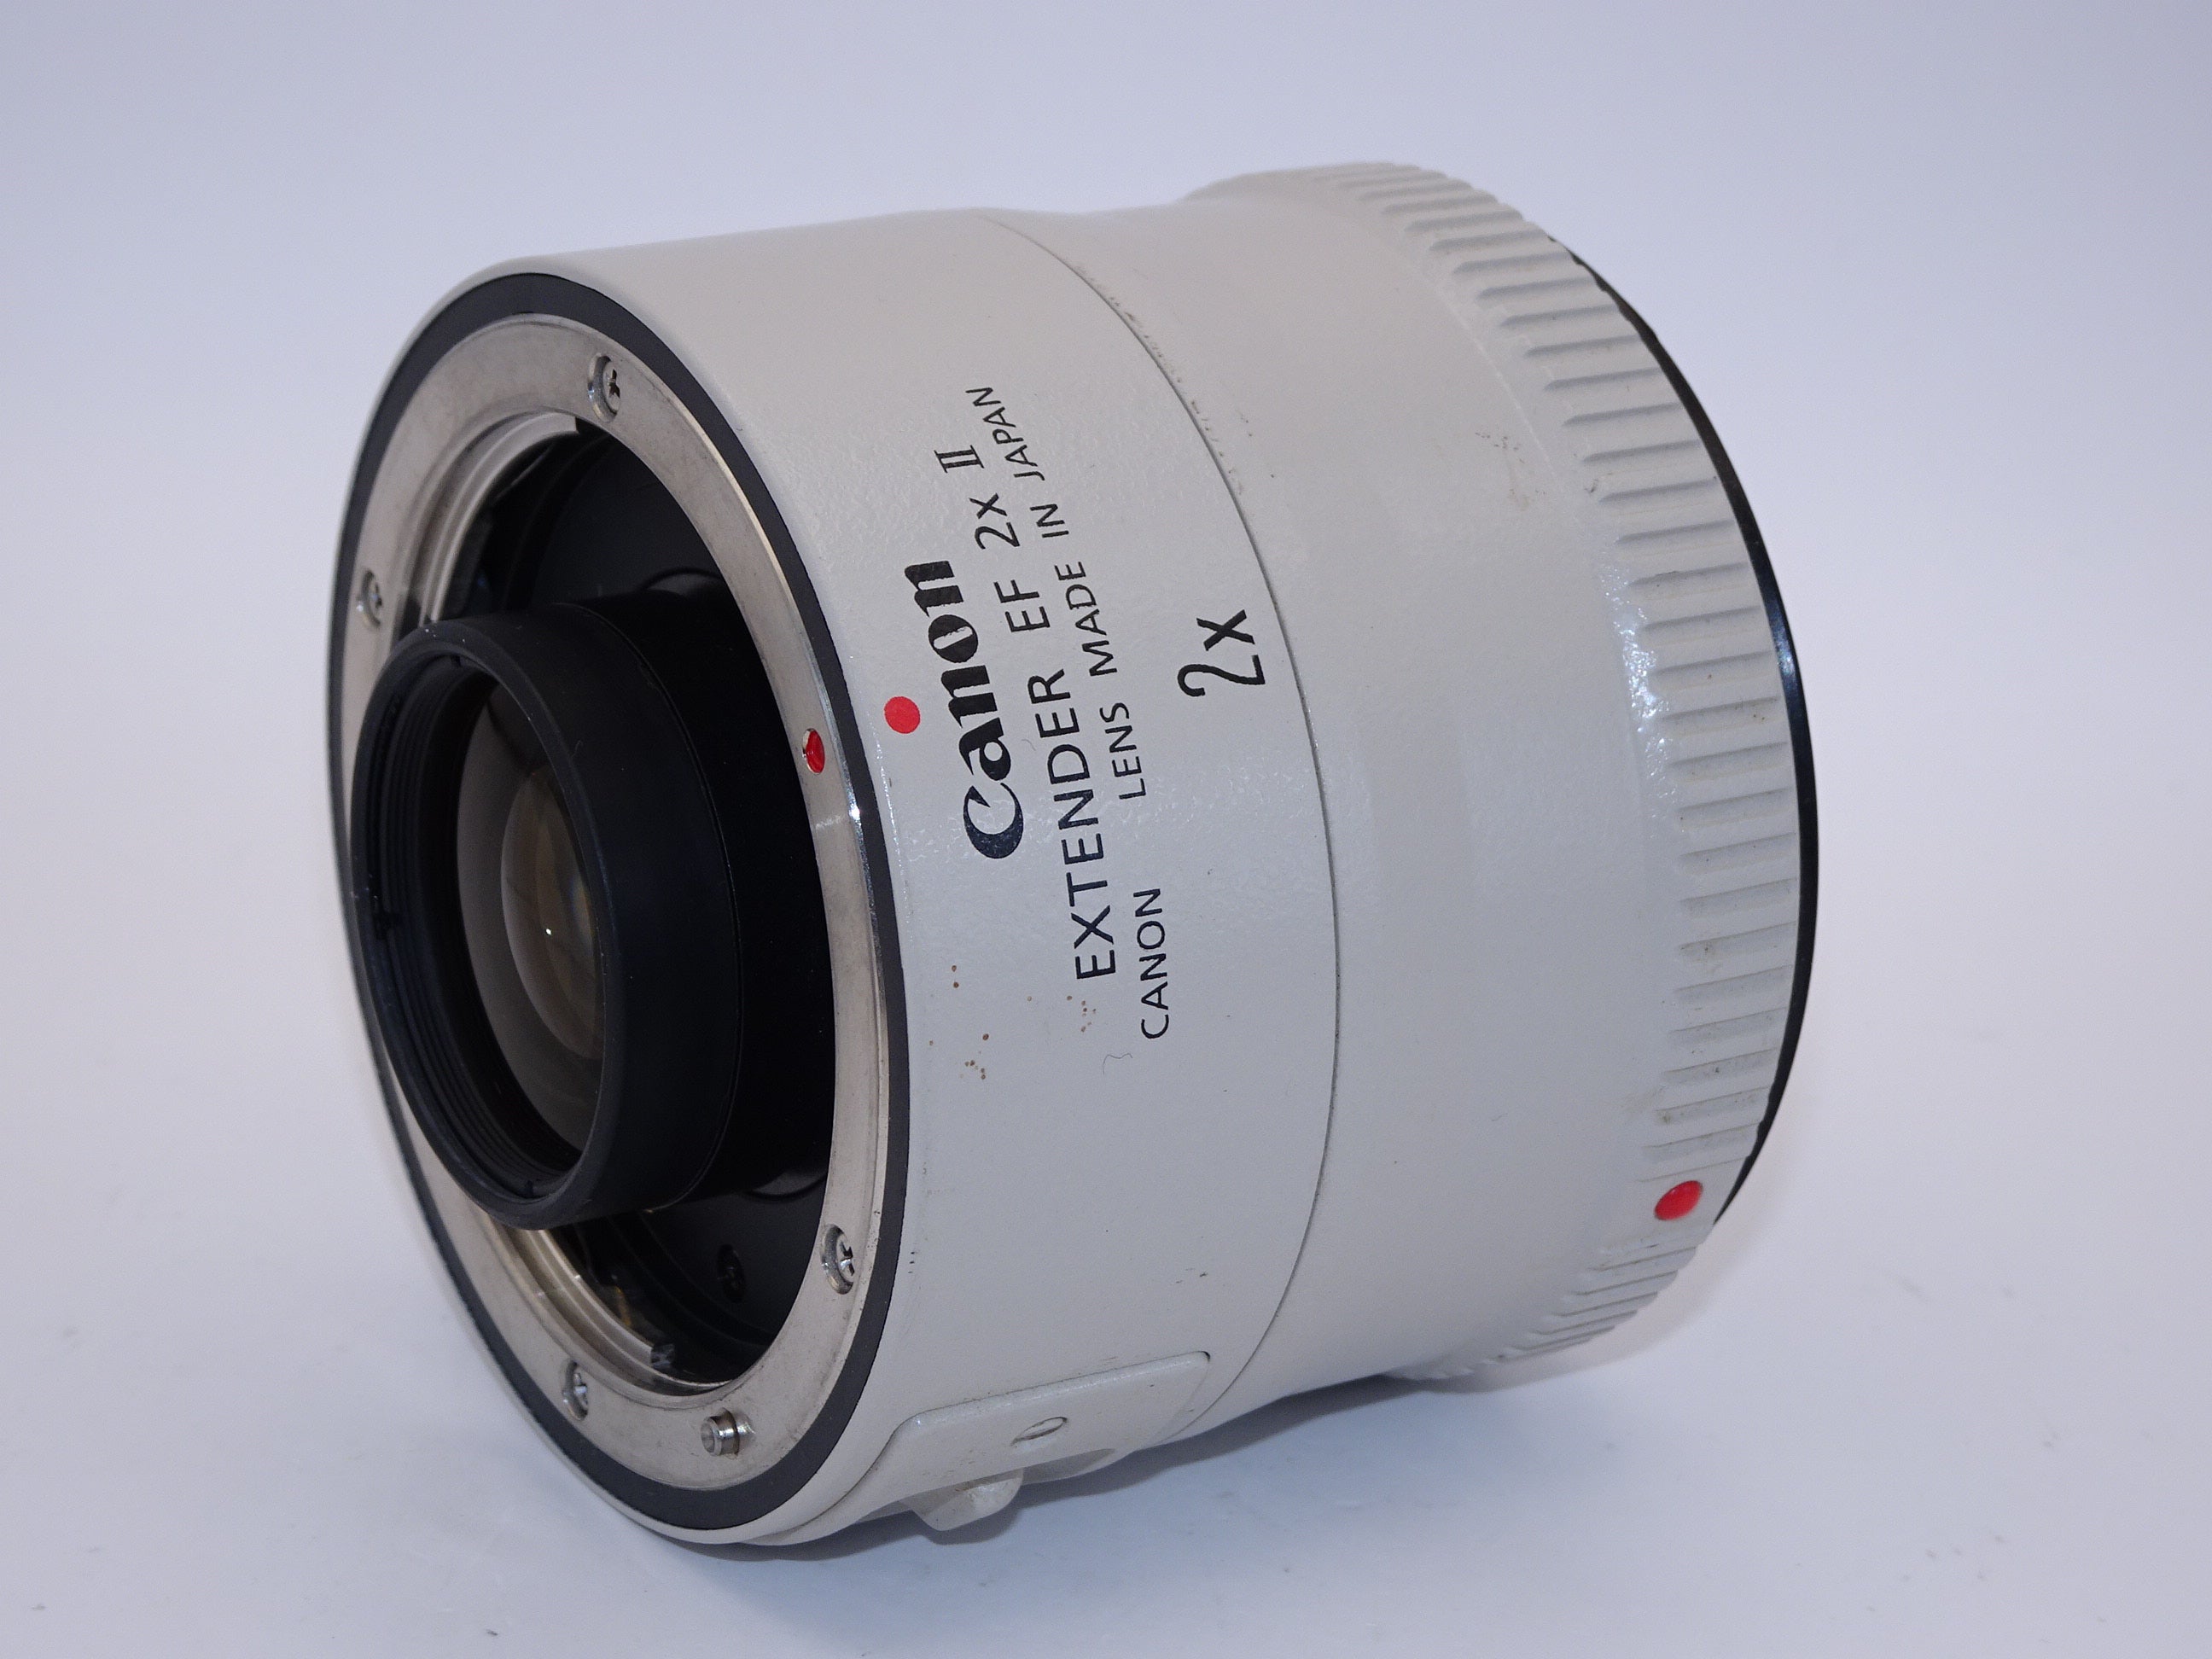 Canon EXTENDER EF2×II エクステンダー レンズ - レンズ(単焦点)